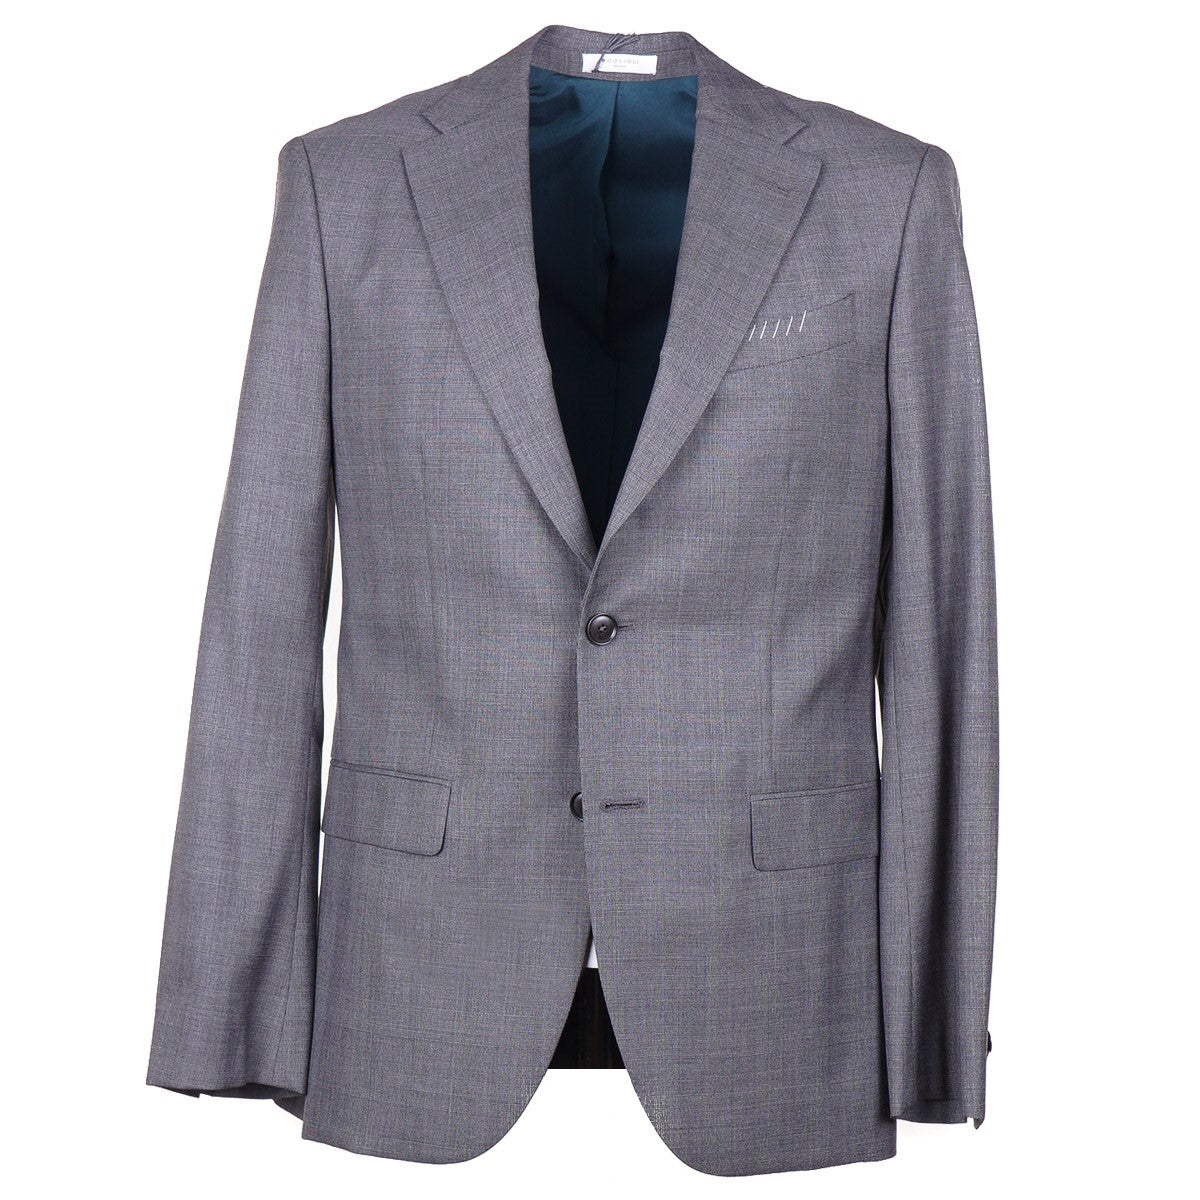 Boglioli Gray Check Wool Suit - Top Shelf Apparel